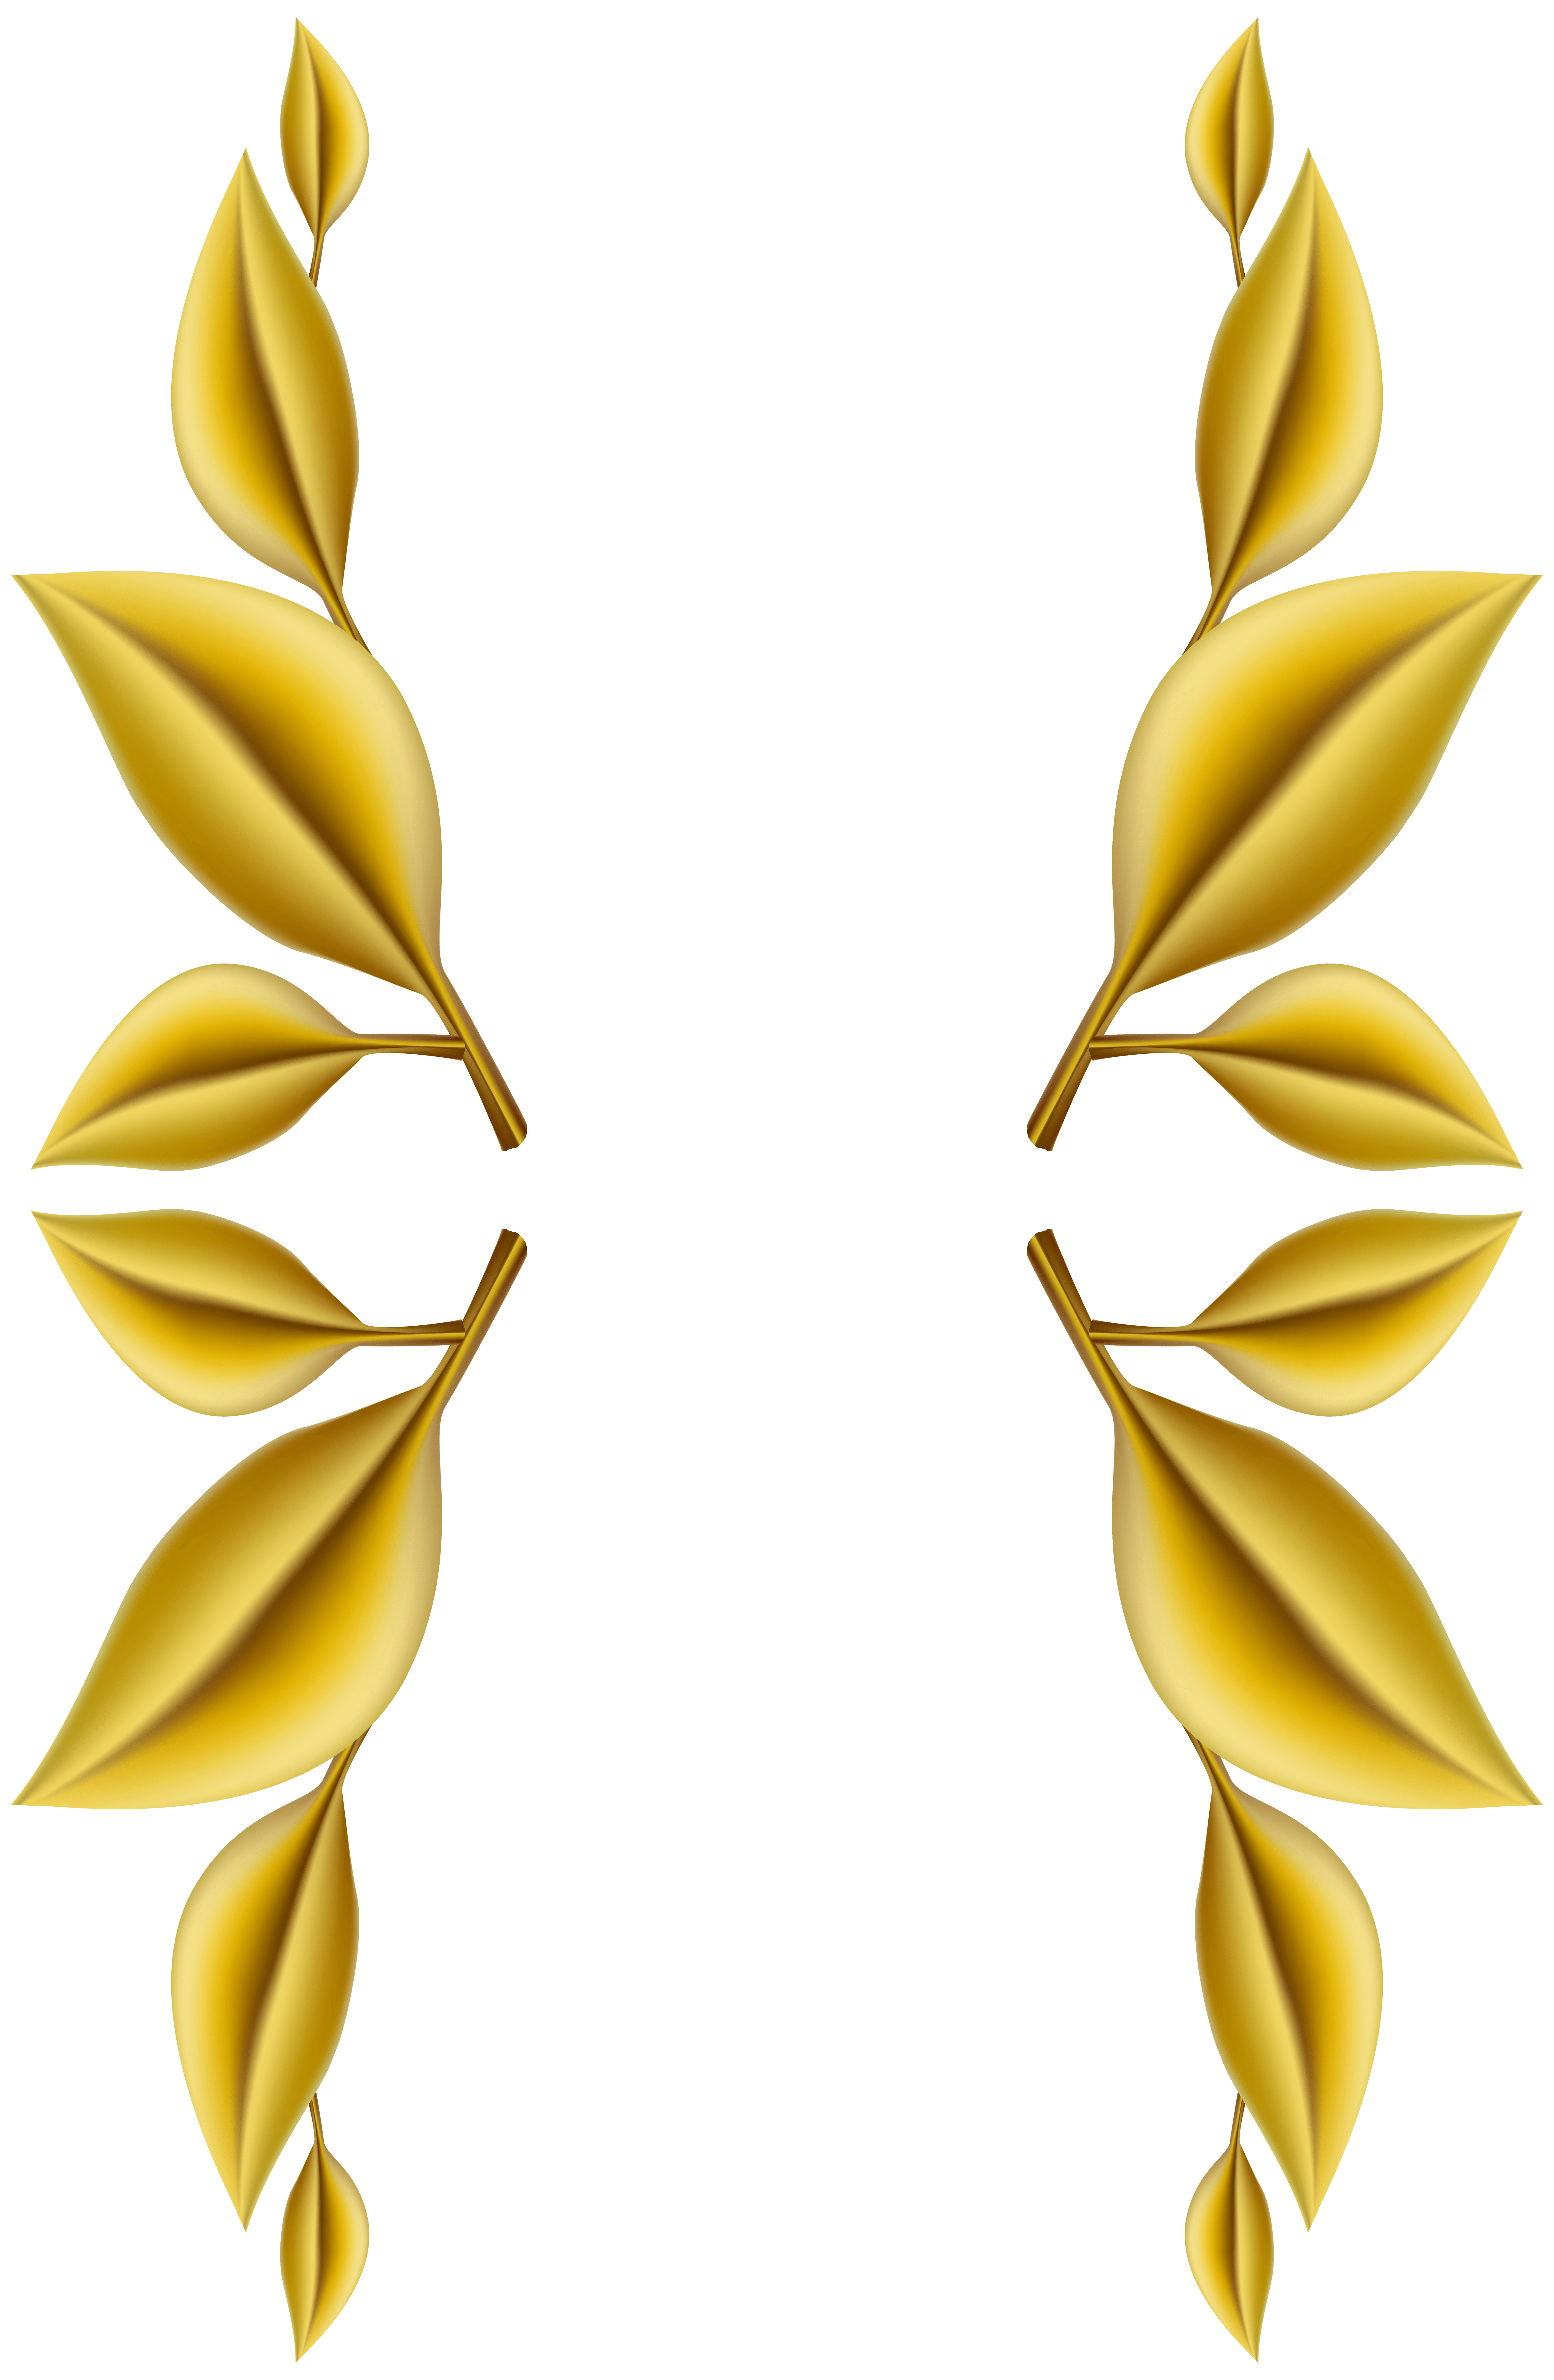 Gold Leaves Decoration PNG Clip Art Image